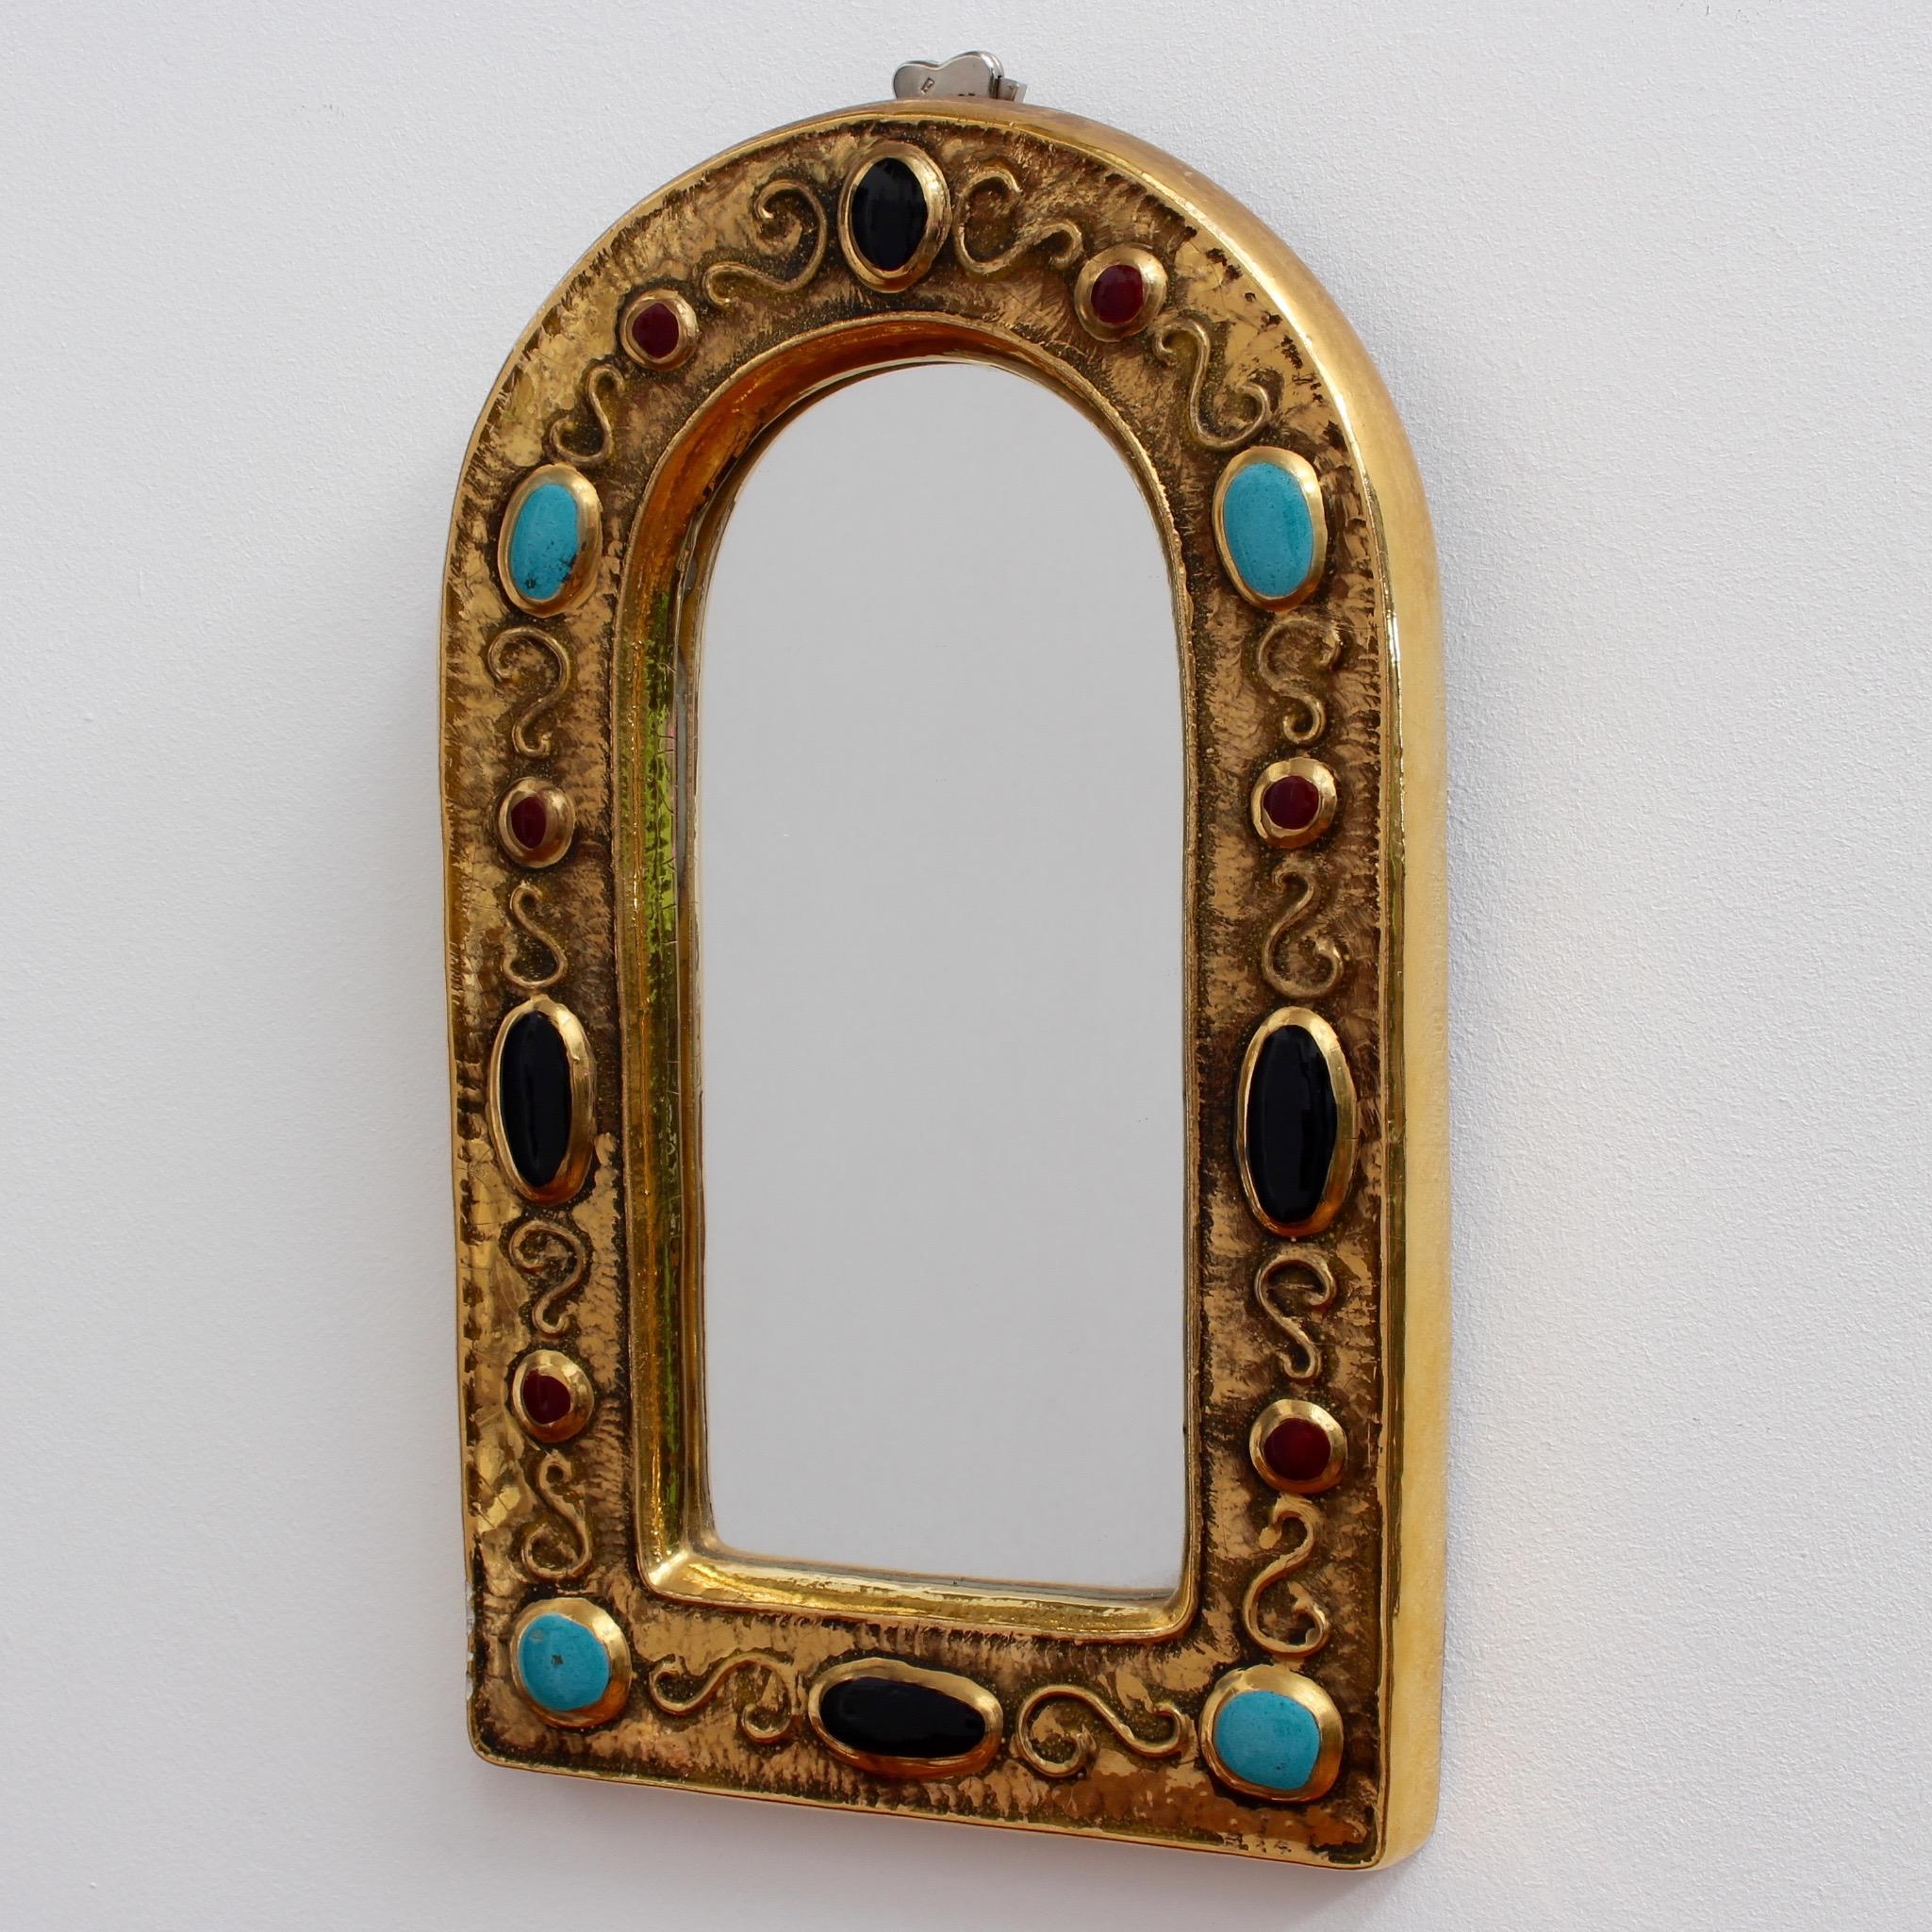 French Byzantine Style Ceramic Wall Mirror by François Lembo, circa 1960s-1970s